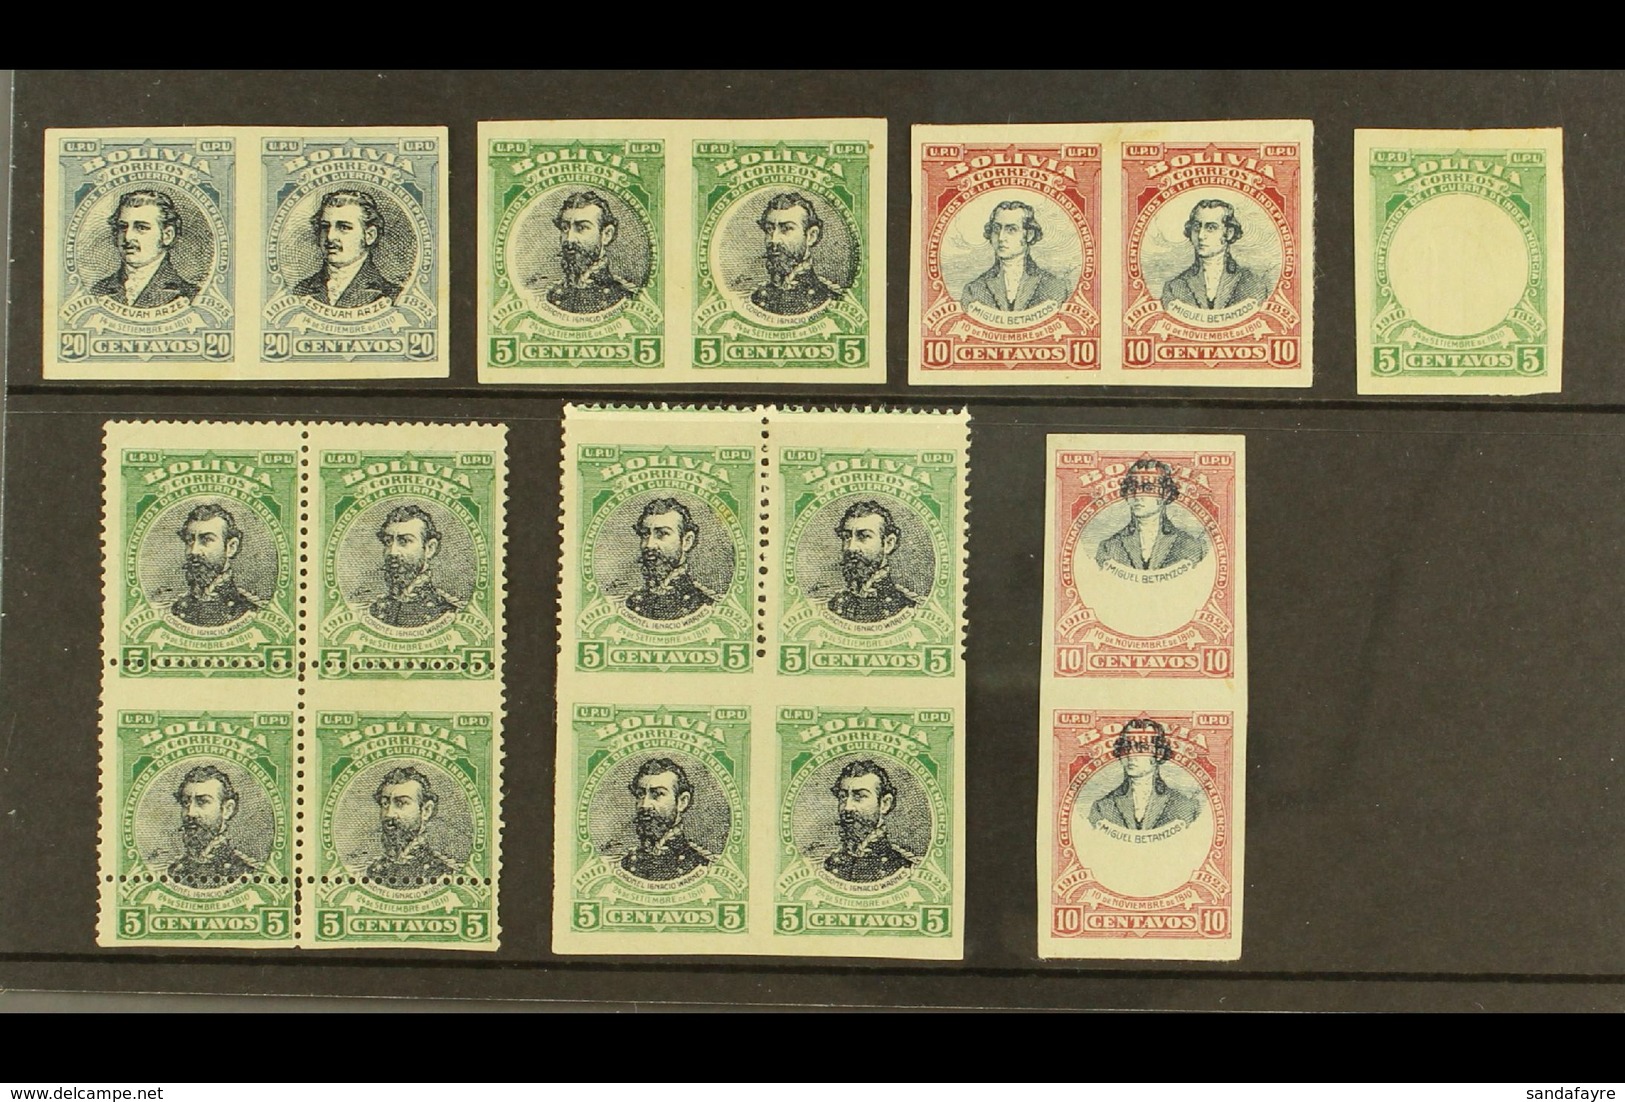 1910 VARIETIES & ERRORS. War Of Independence Fine Mint Group Of Perf Varieties & Errors, Comprising 1910 Horiz Imperf Pa - Bolivia